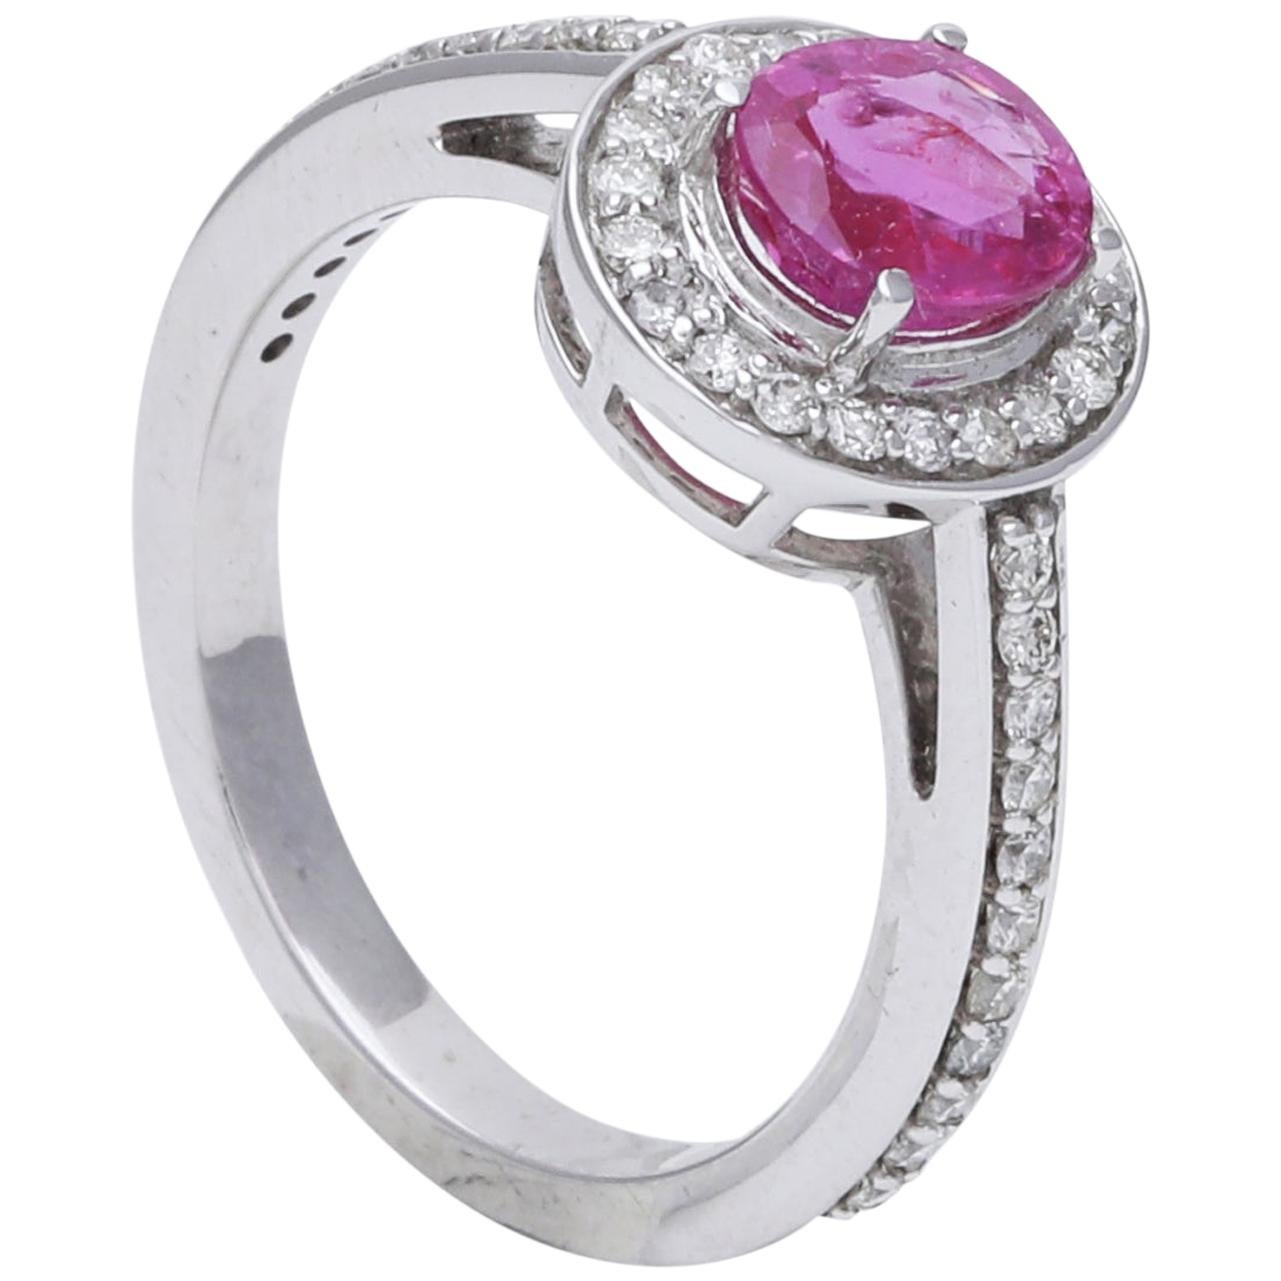 Certified Natural Pink Ruby Ring with Diamonds Set in 18 Karat White Gold